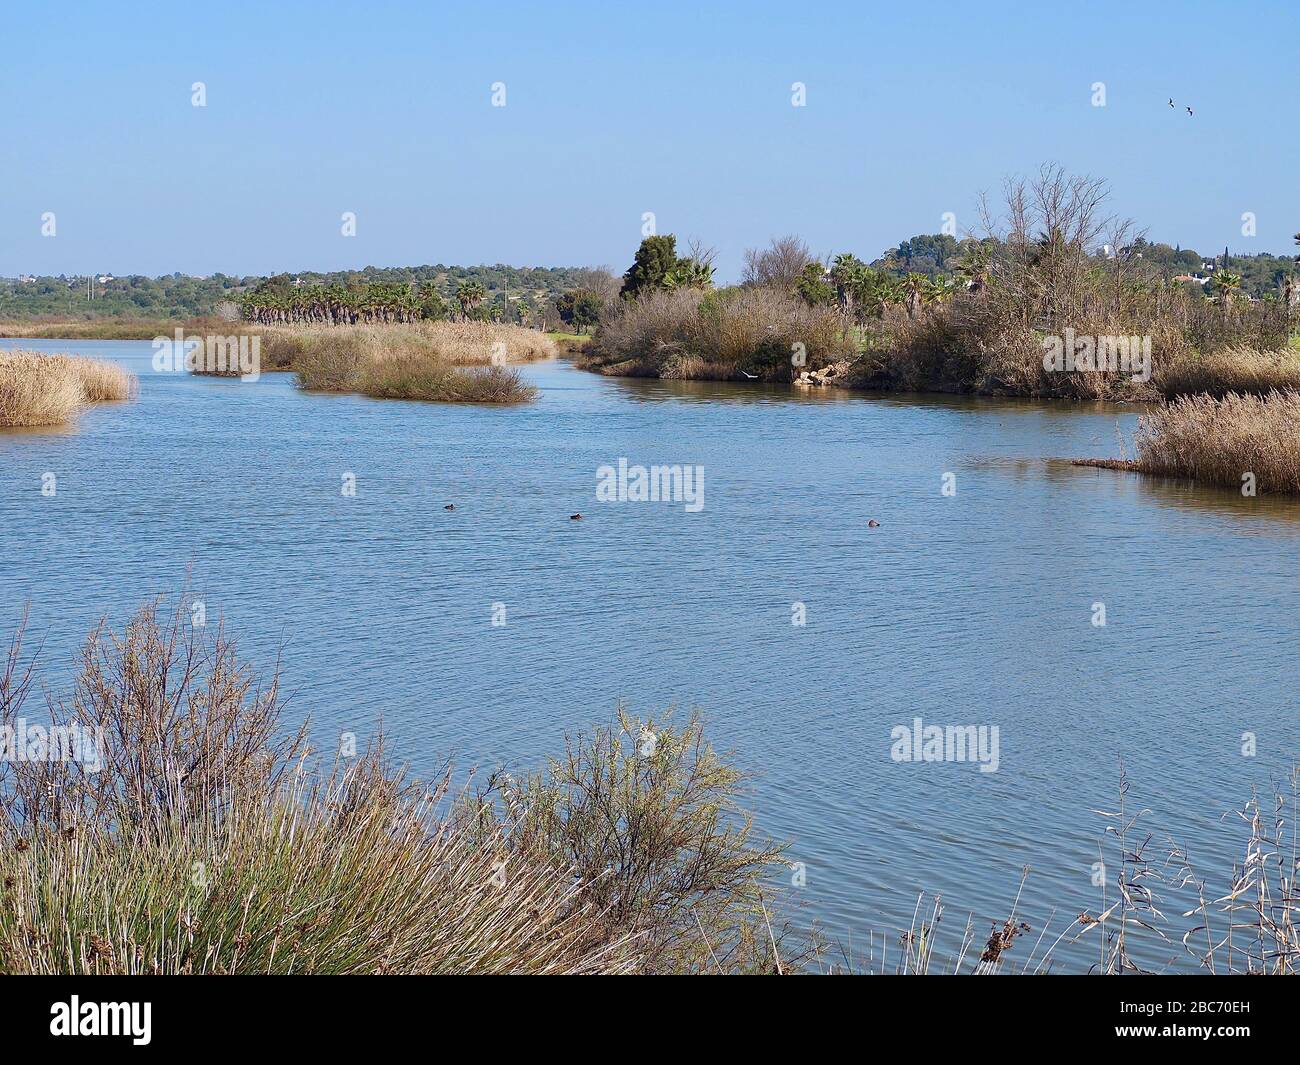 Lagoa dos Salgados, a biotope between Armacaou de Pera and Albufeira at the Algarve coast of Portugal Stock Photo